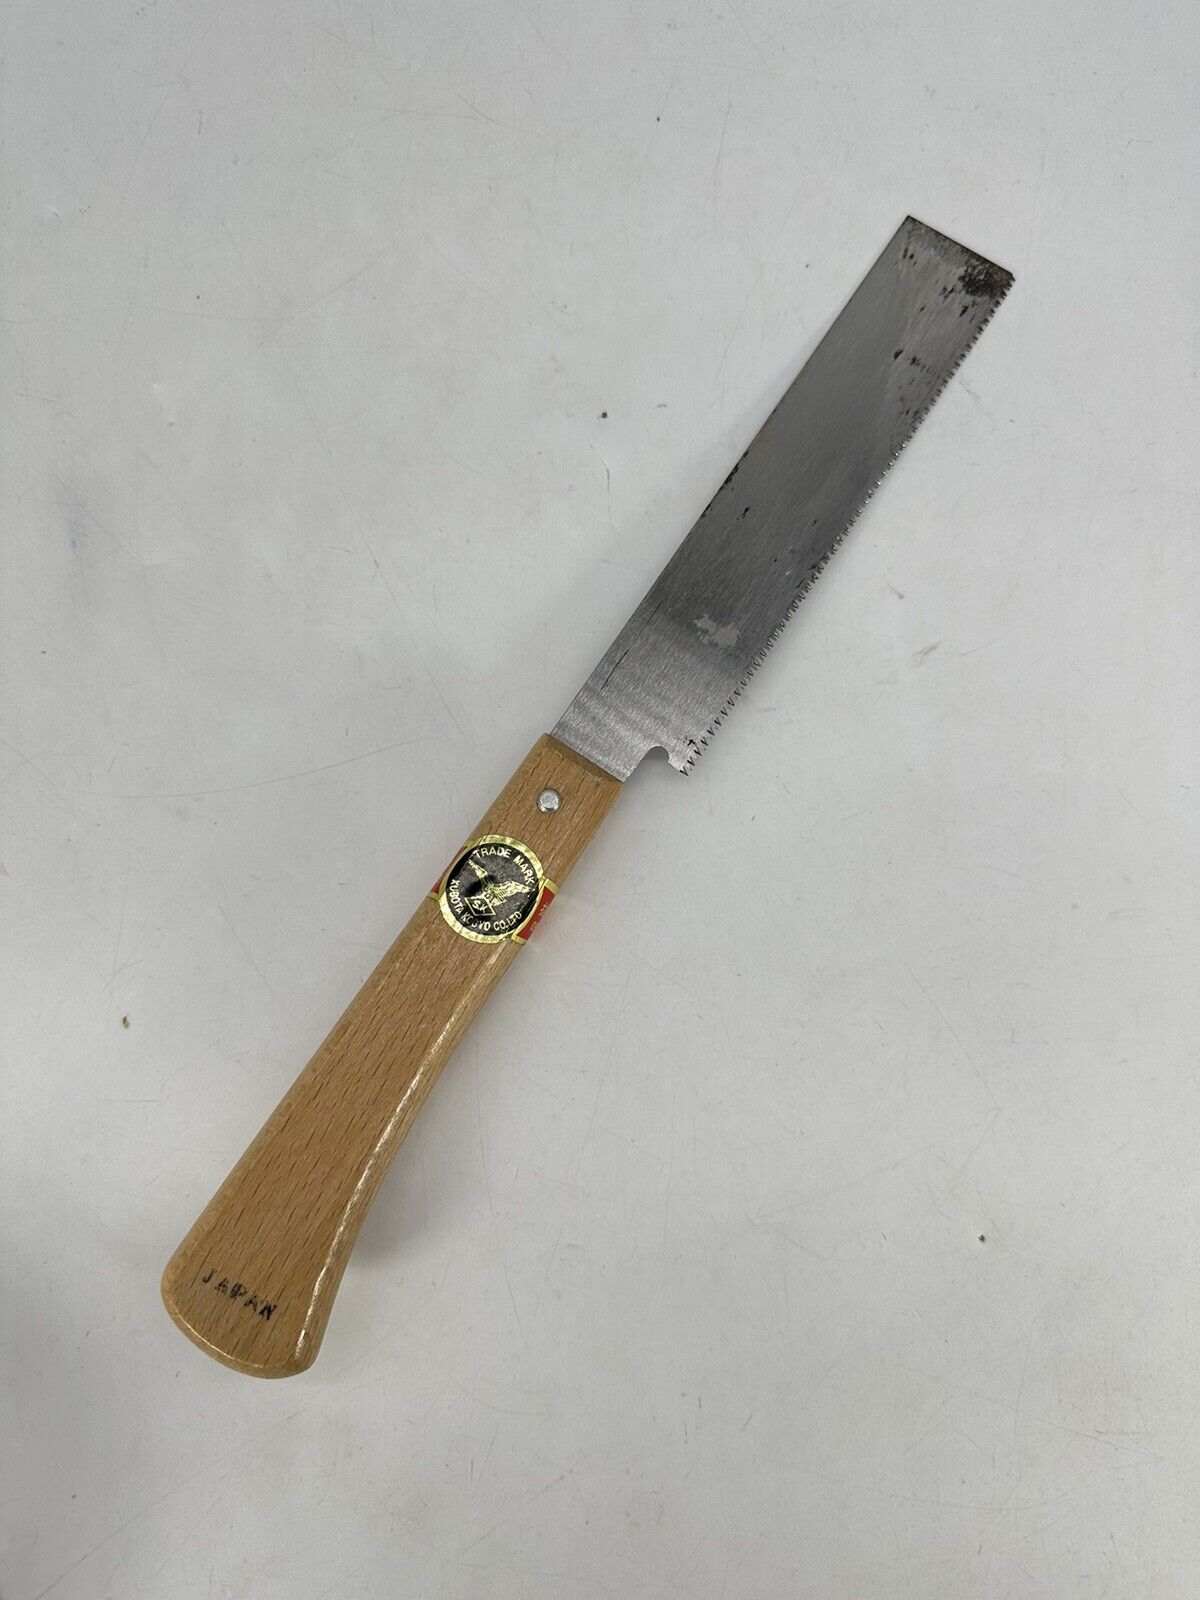 Kubota Kogyo Co 0002 - 08 Hand Flush Cut Saw 6” Blade Made In Japan